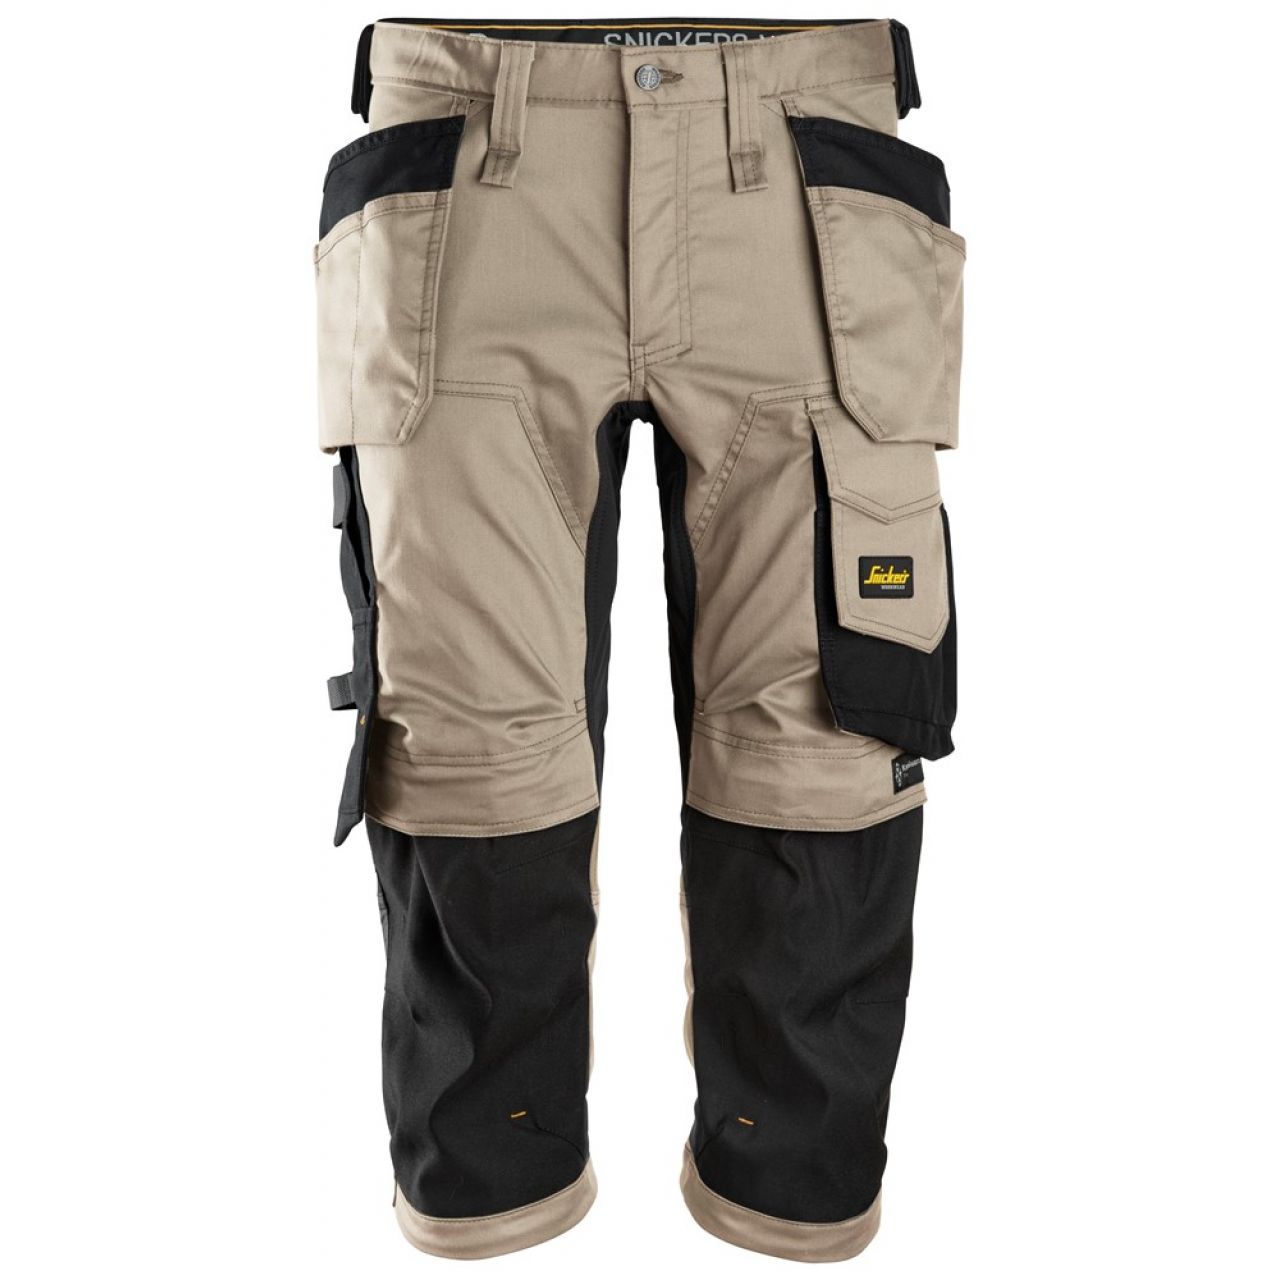 6142 Pantalones pirata de trabajo elasticos con bolsillos flotantes AllroundWork beige-negro talla 50